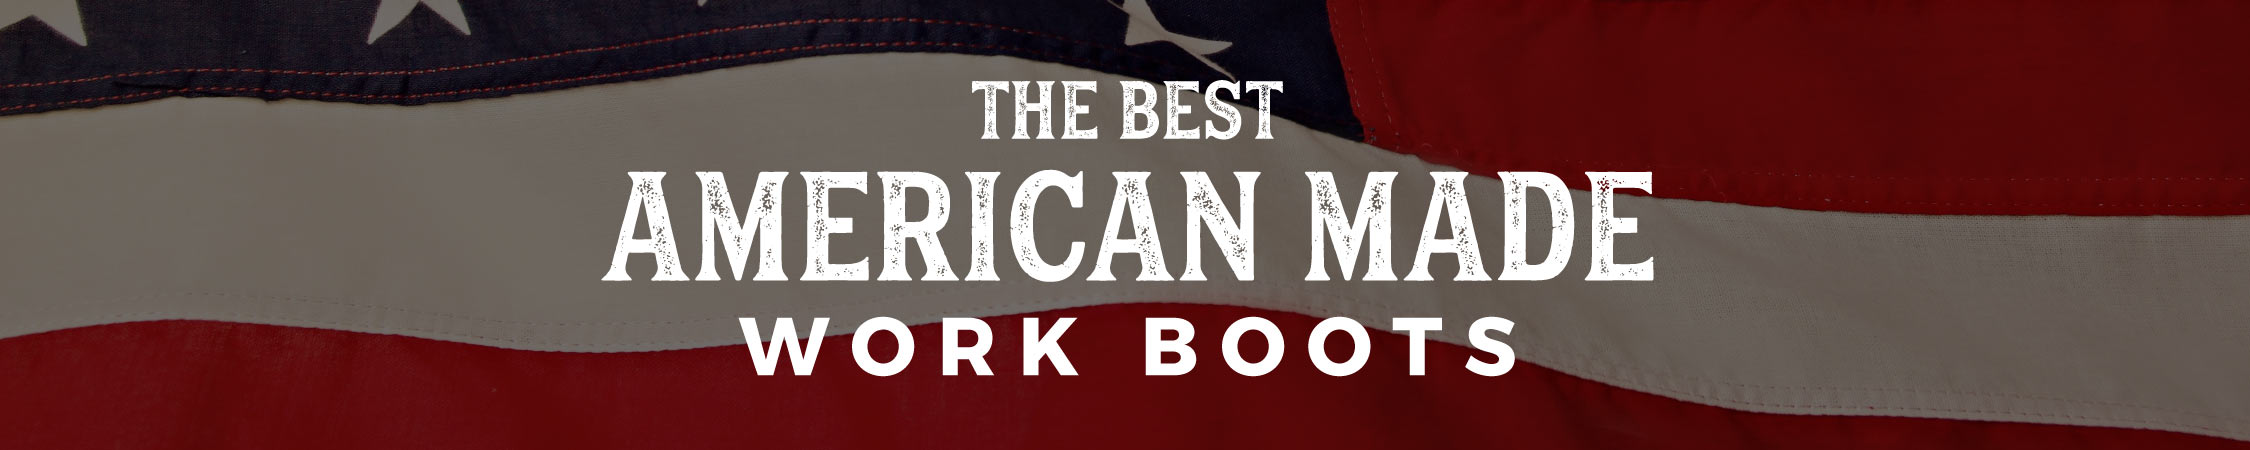 best american made work boots header